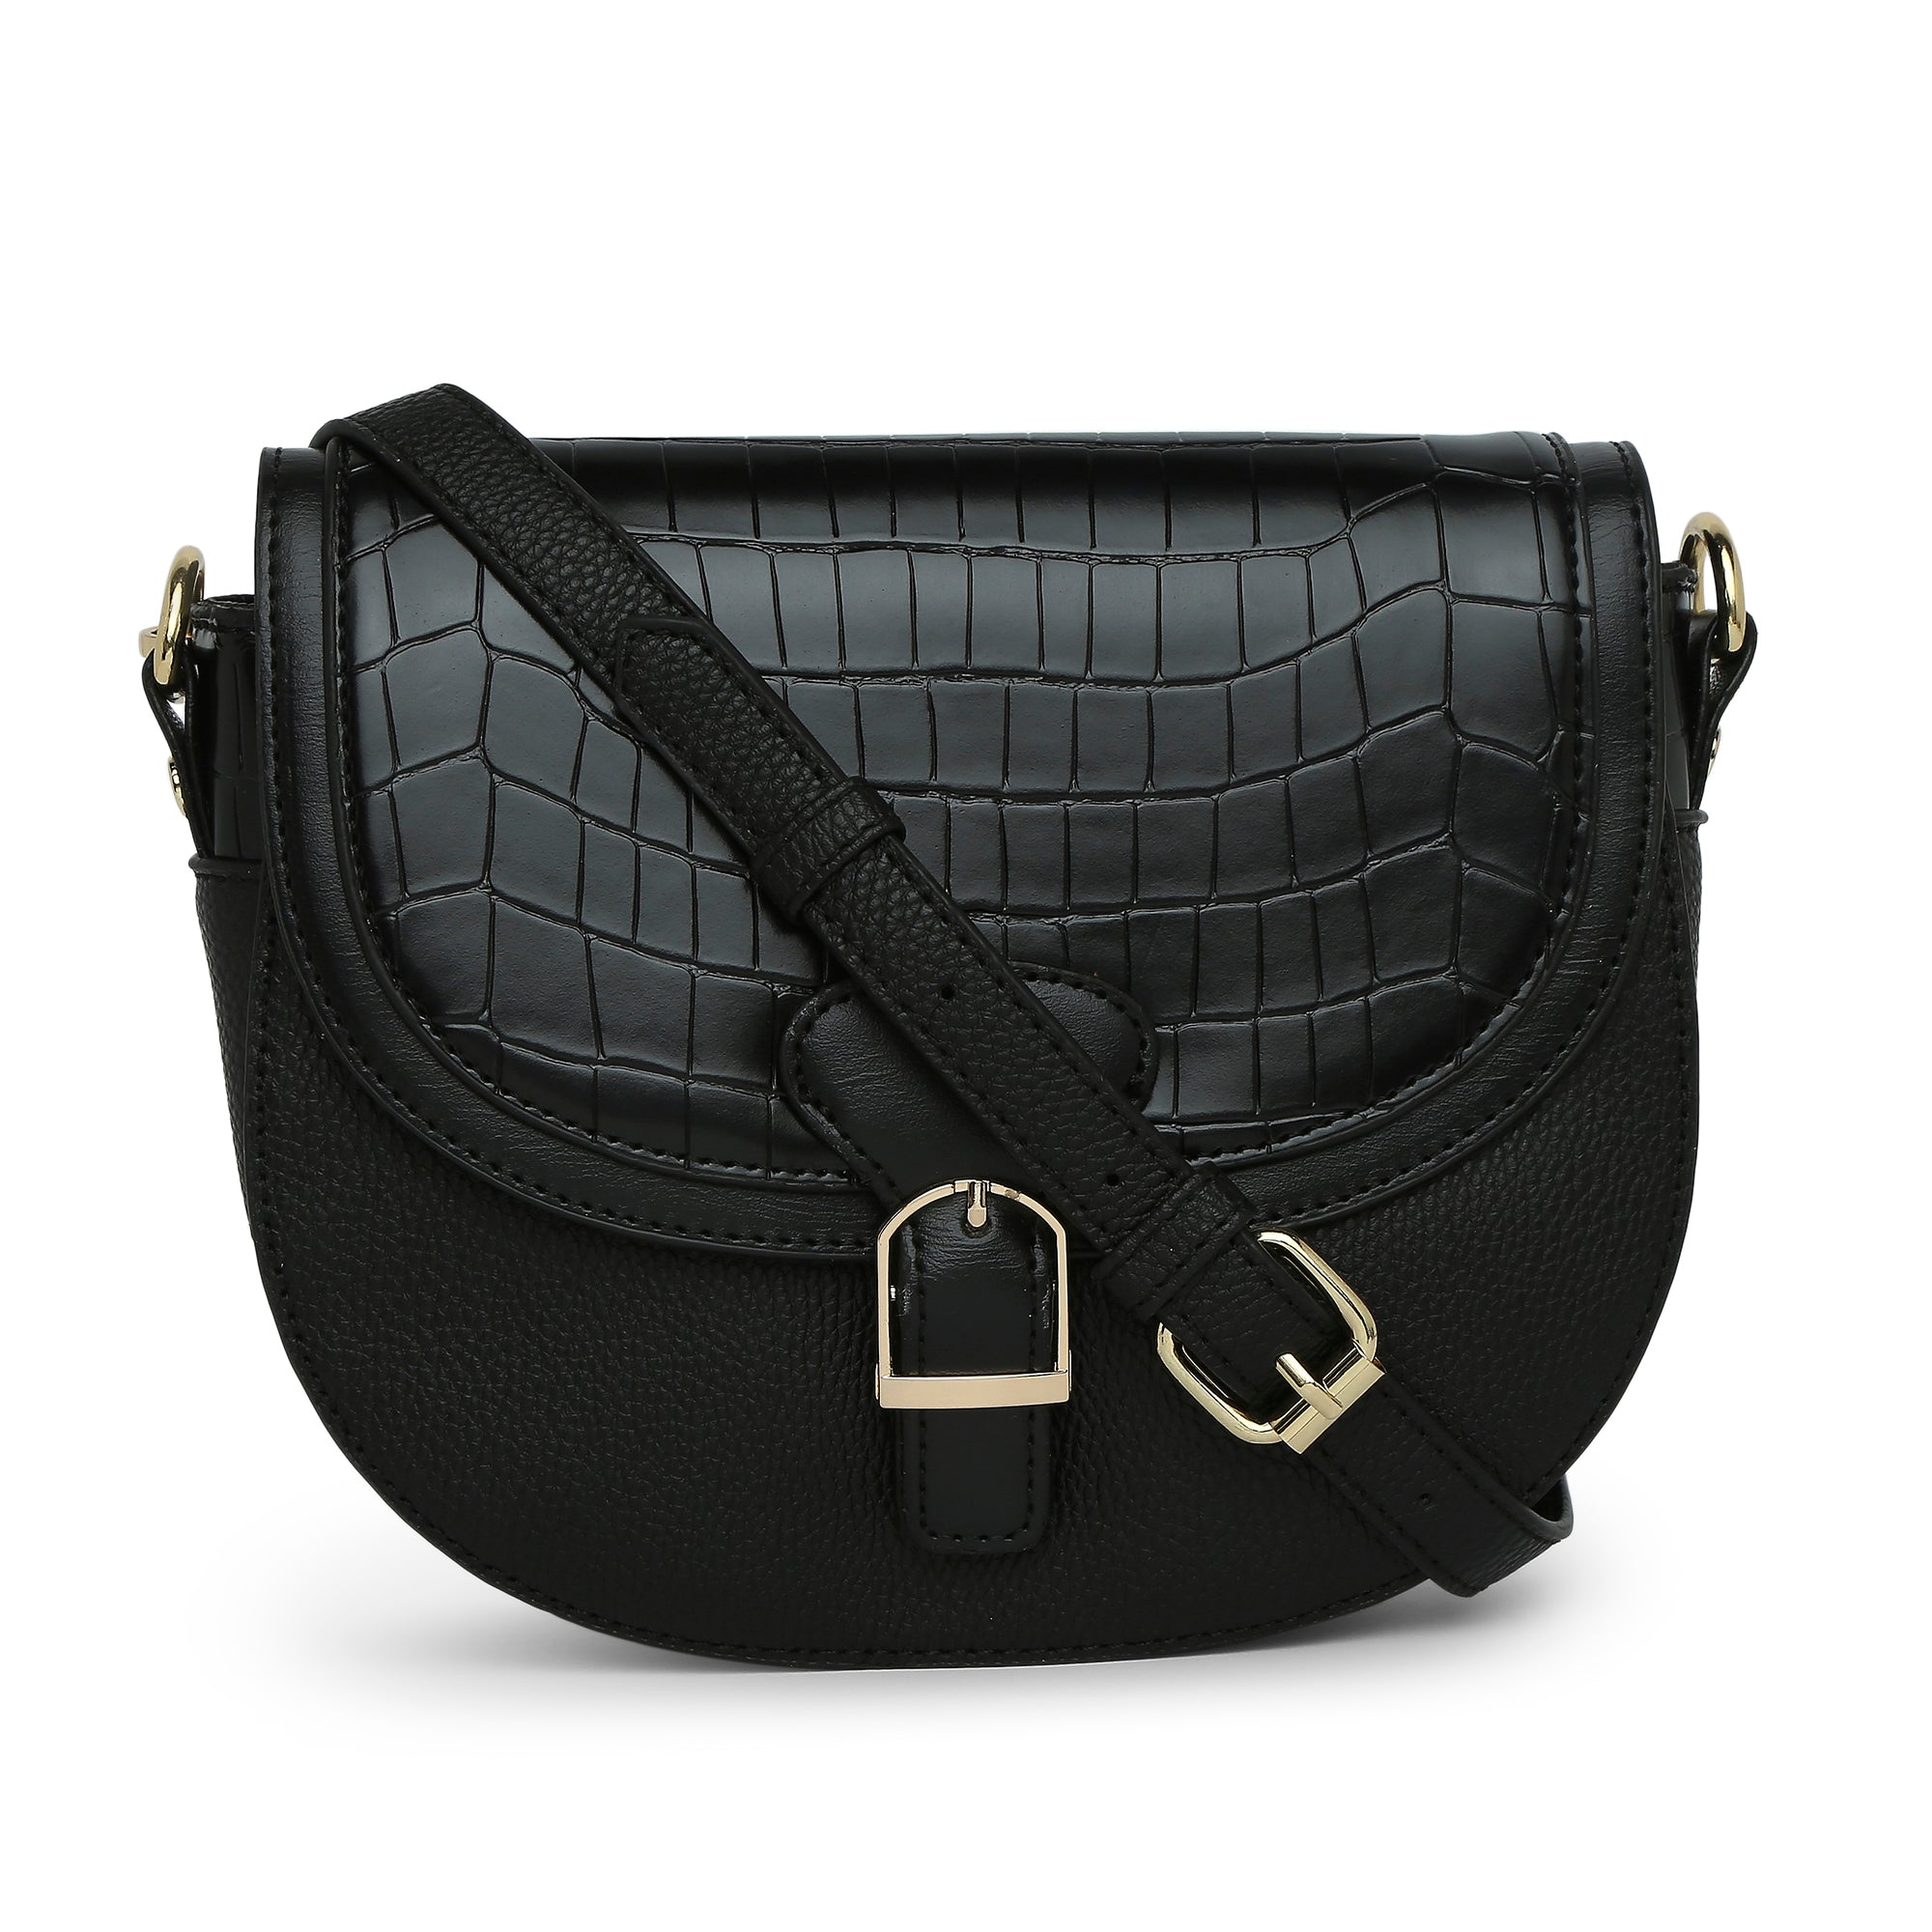 Accessorize London Women's Faux Leather Black Nicola Saddle Sling Bag